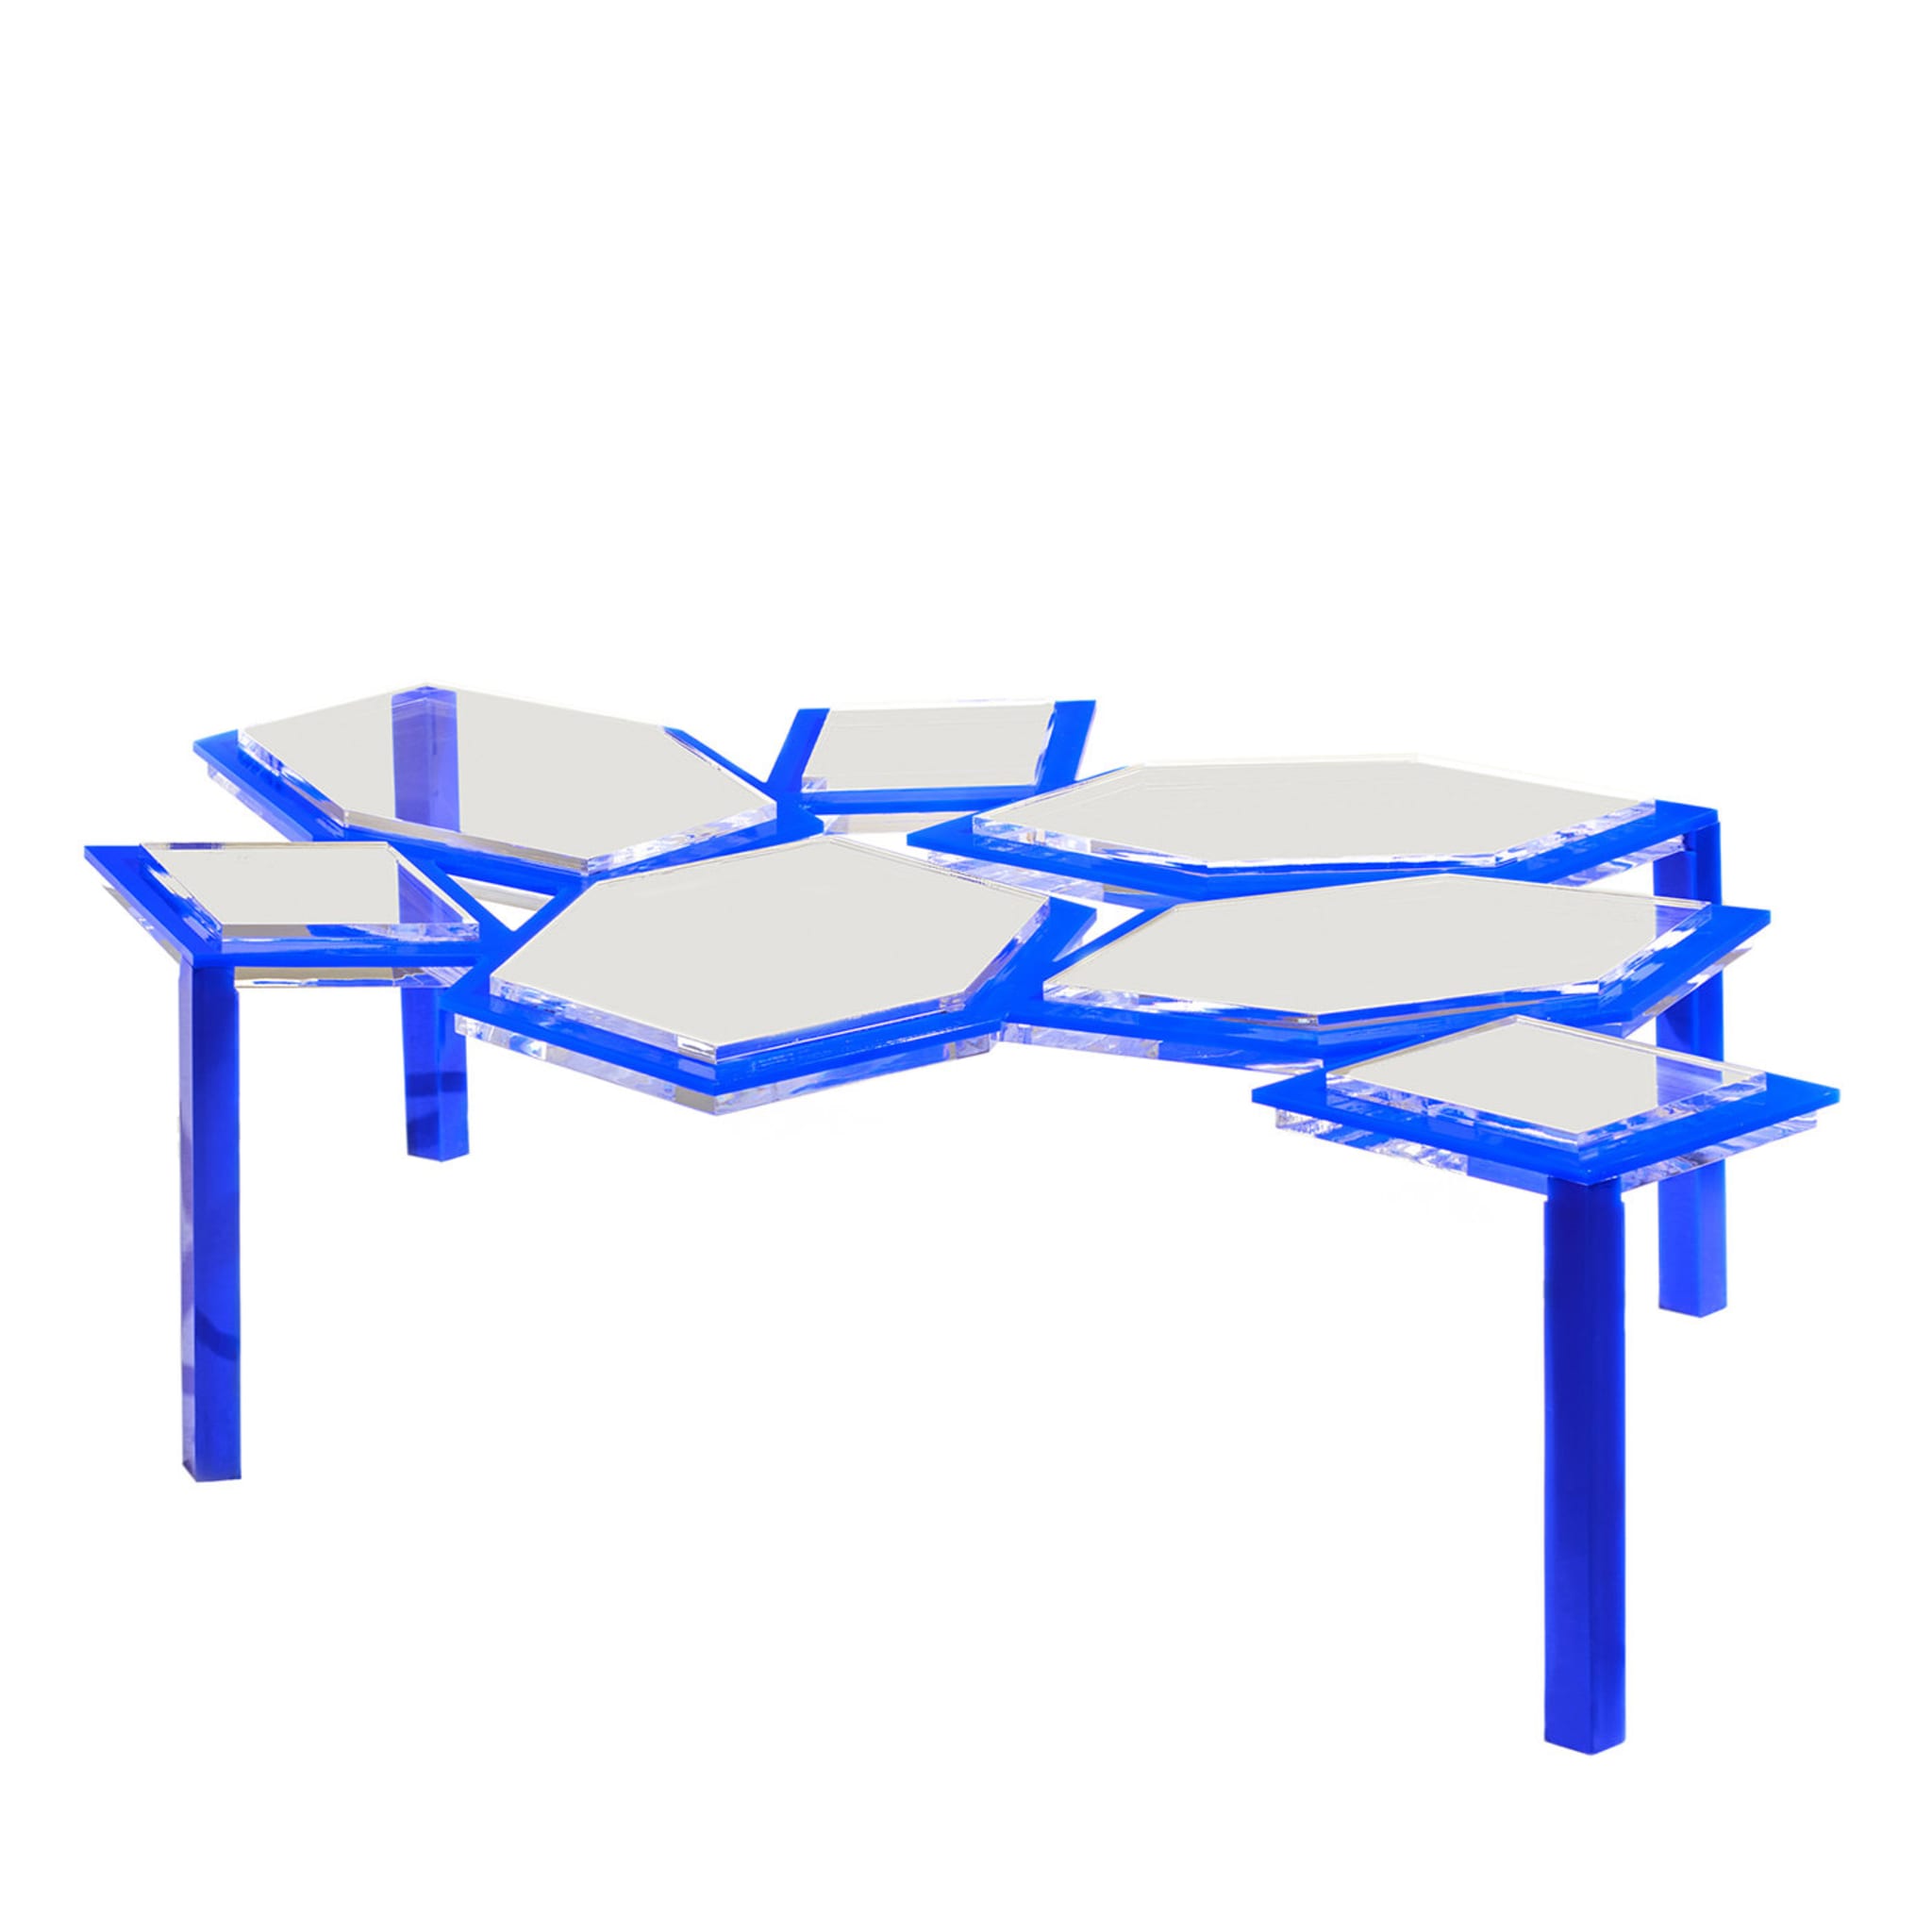 Grande table basse bleue Penrose #2 - Vue principale